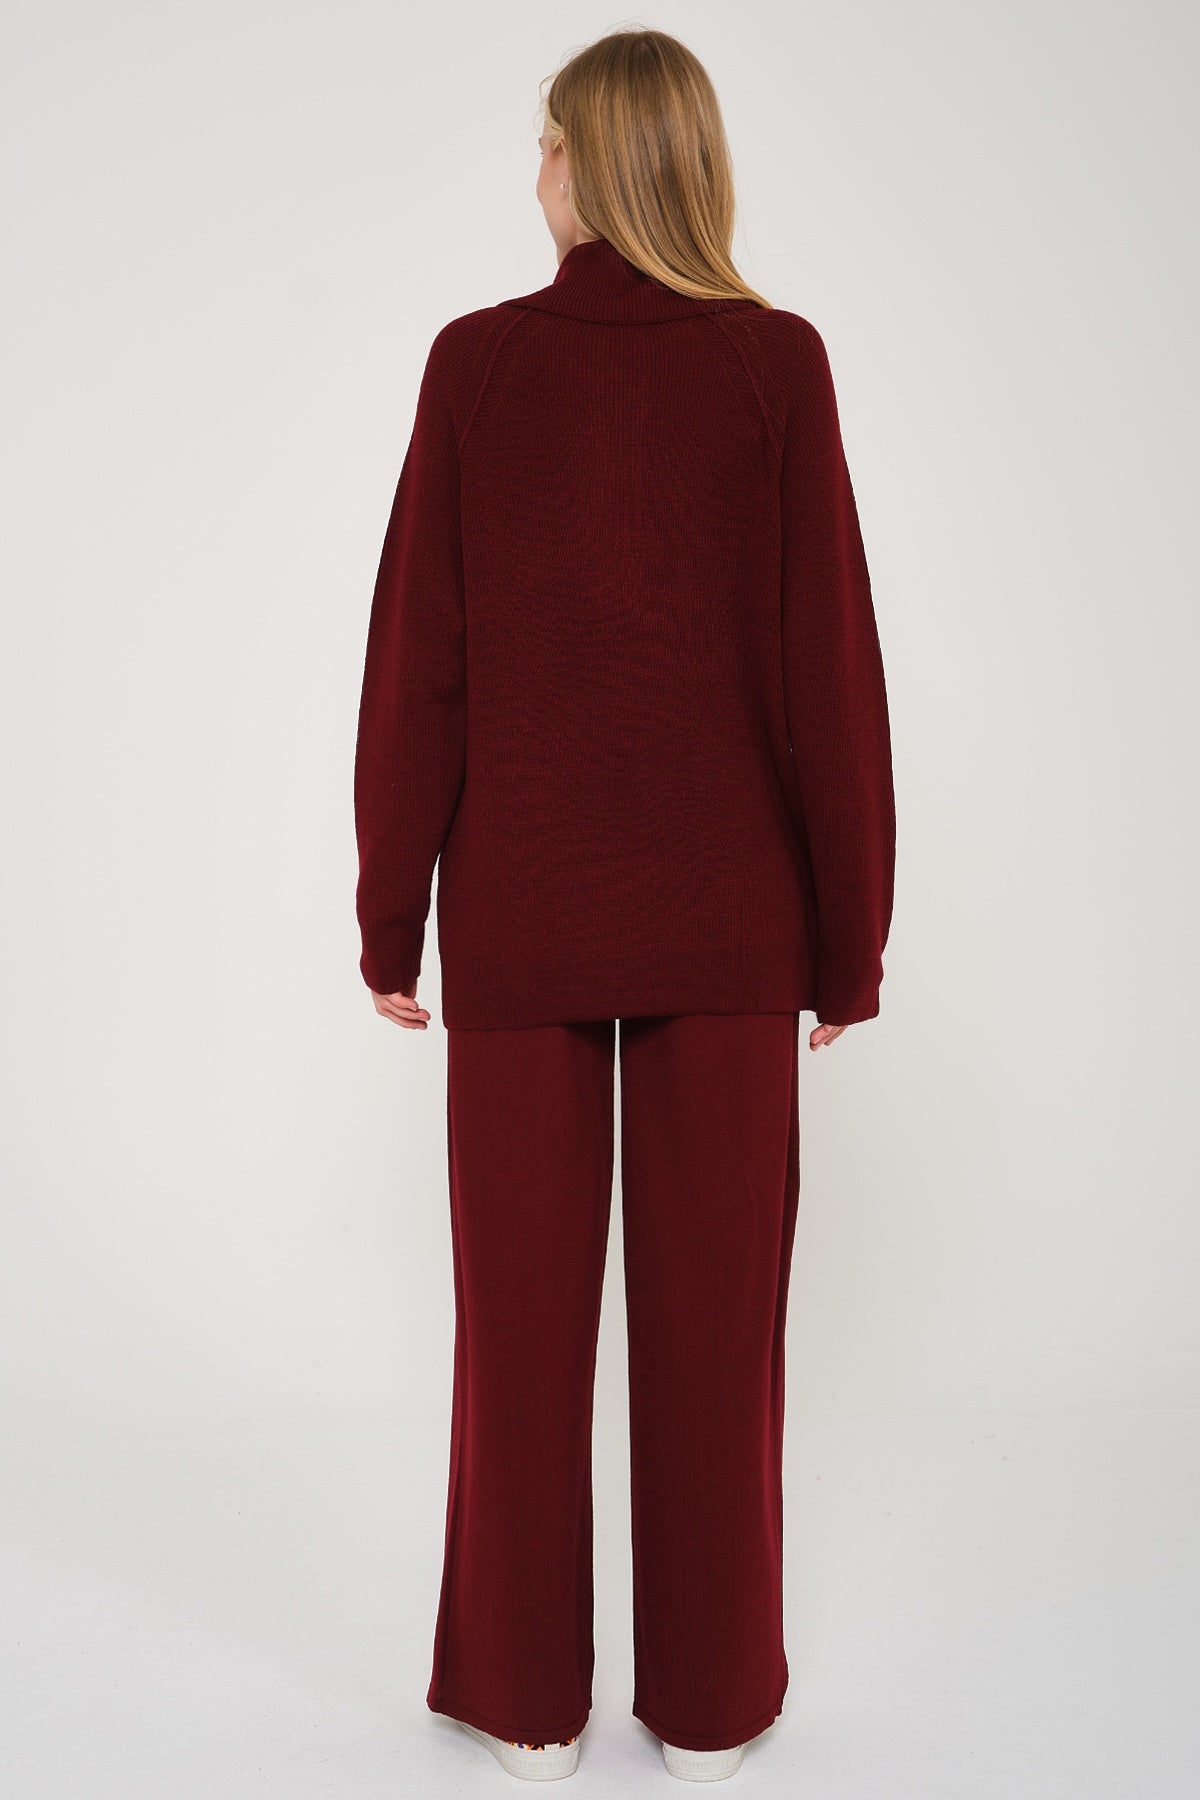 Burgundy Knit Wool Sweater & Pants Set